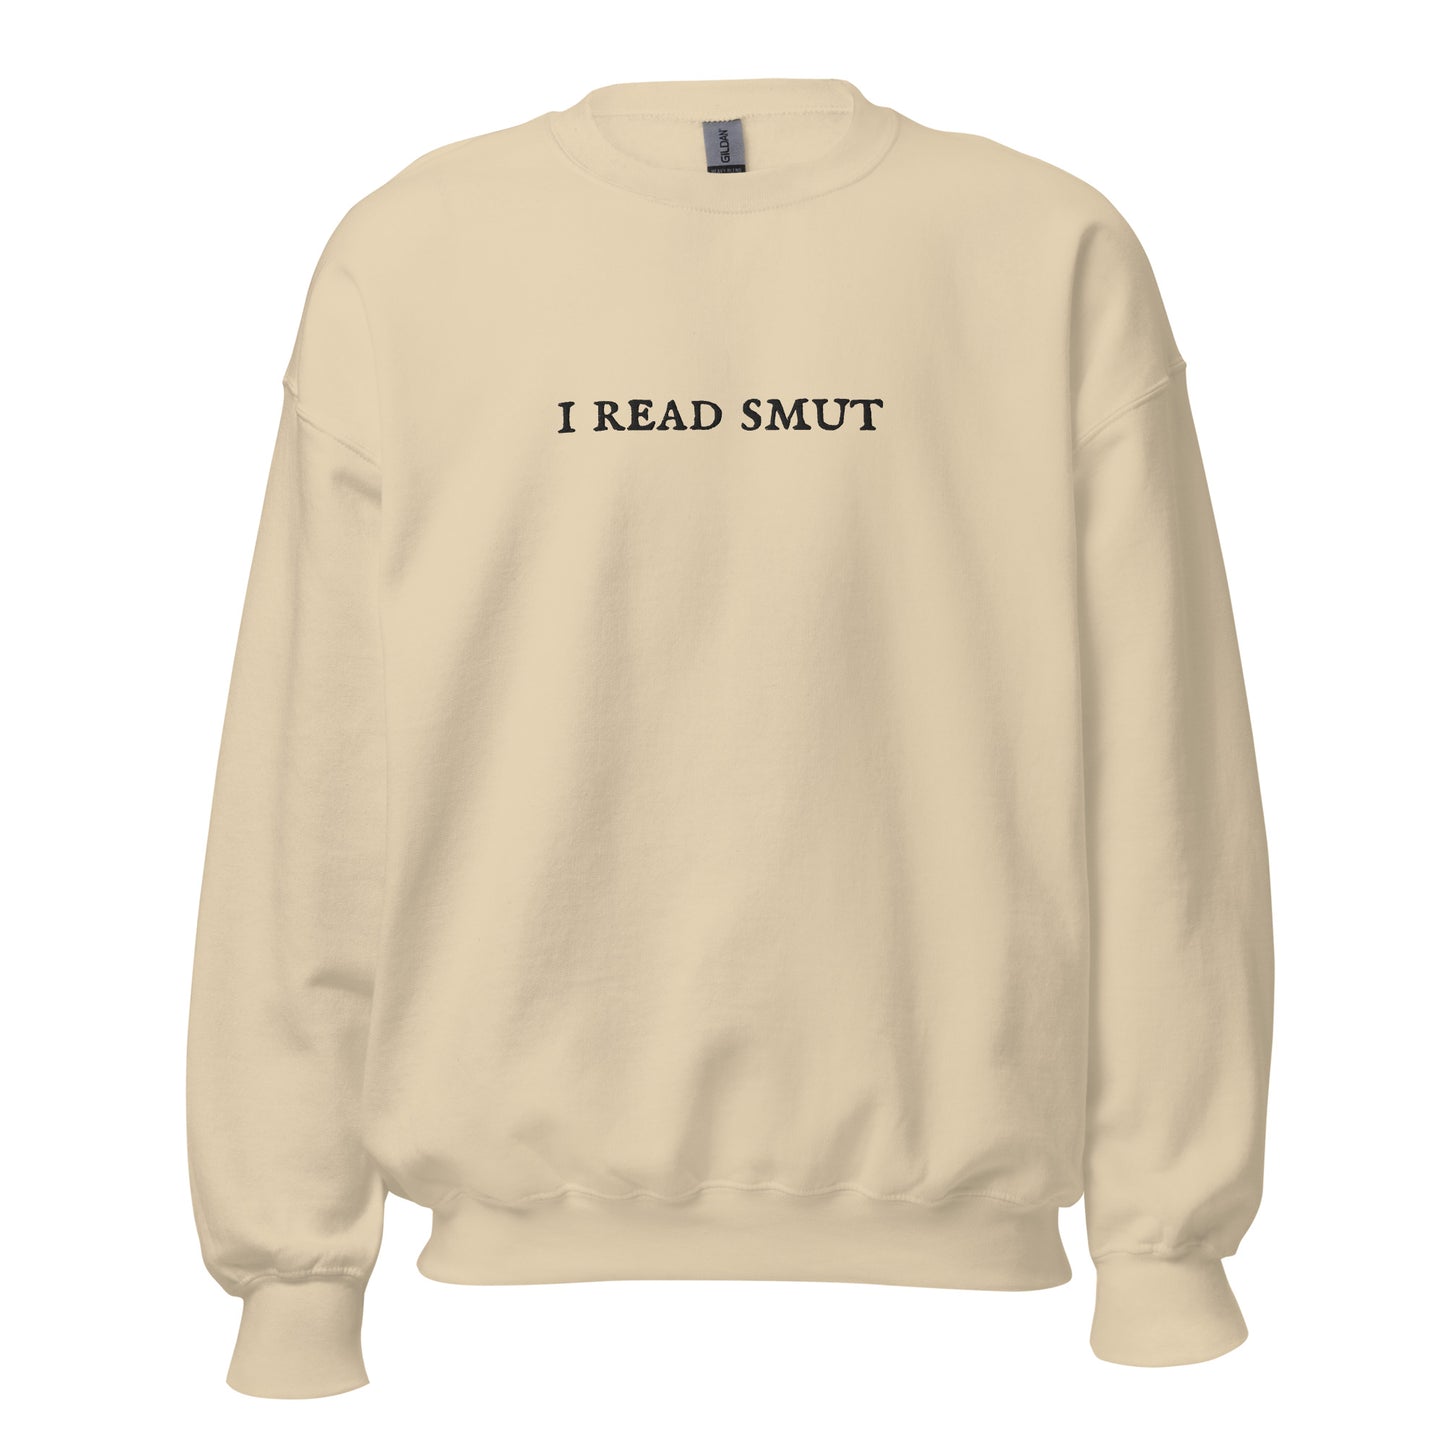 i read smut embroidered sweatshirt